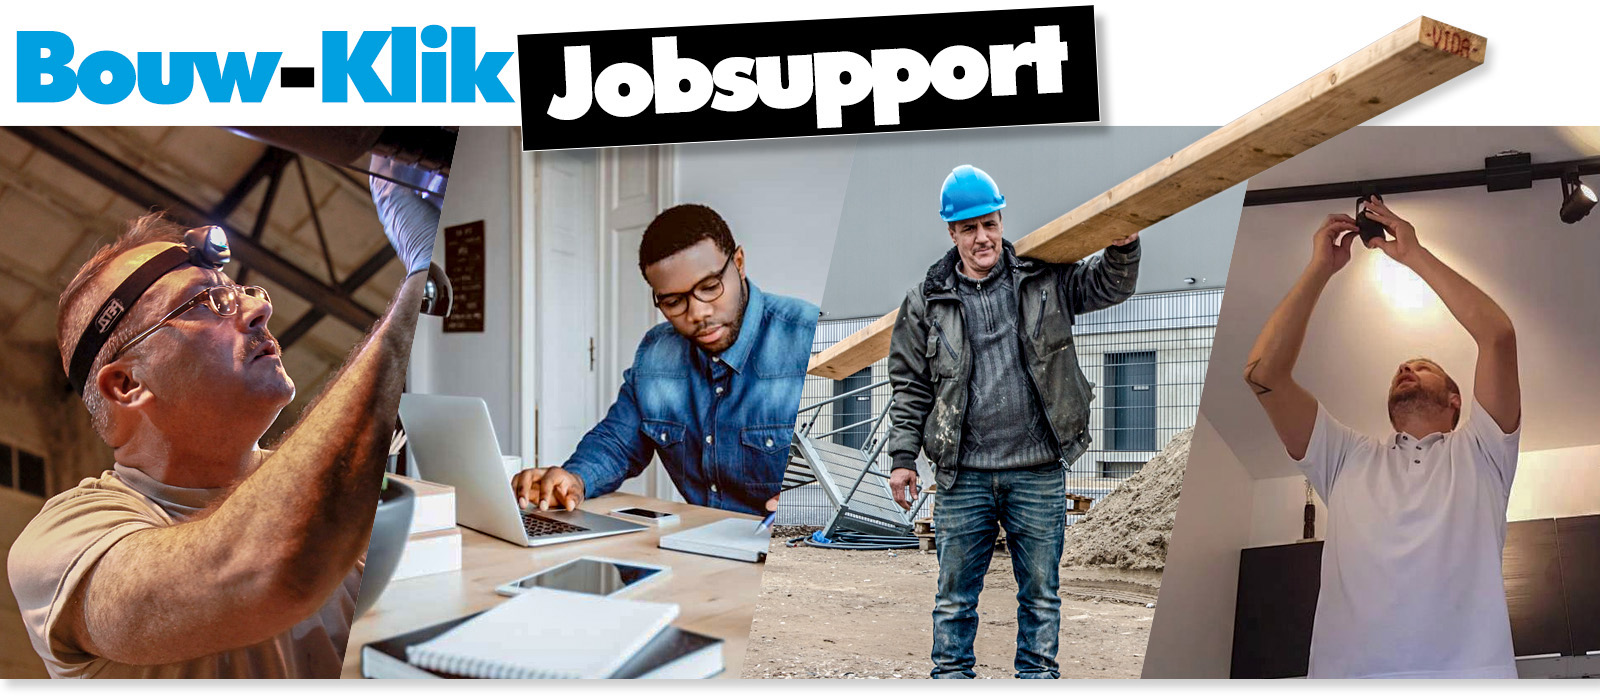 bouwklik jobsupport banner